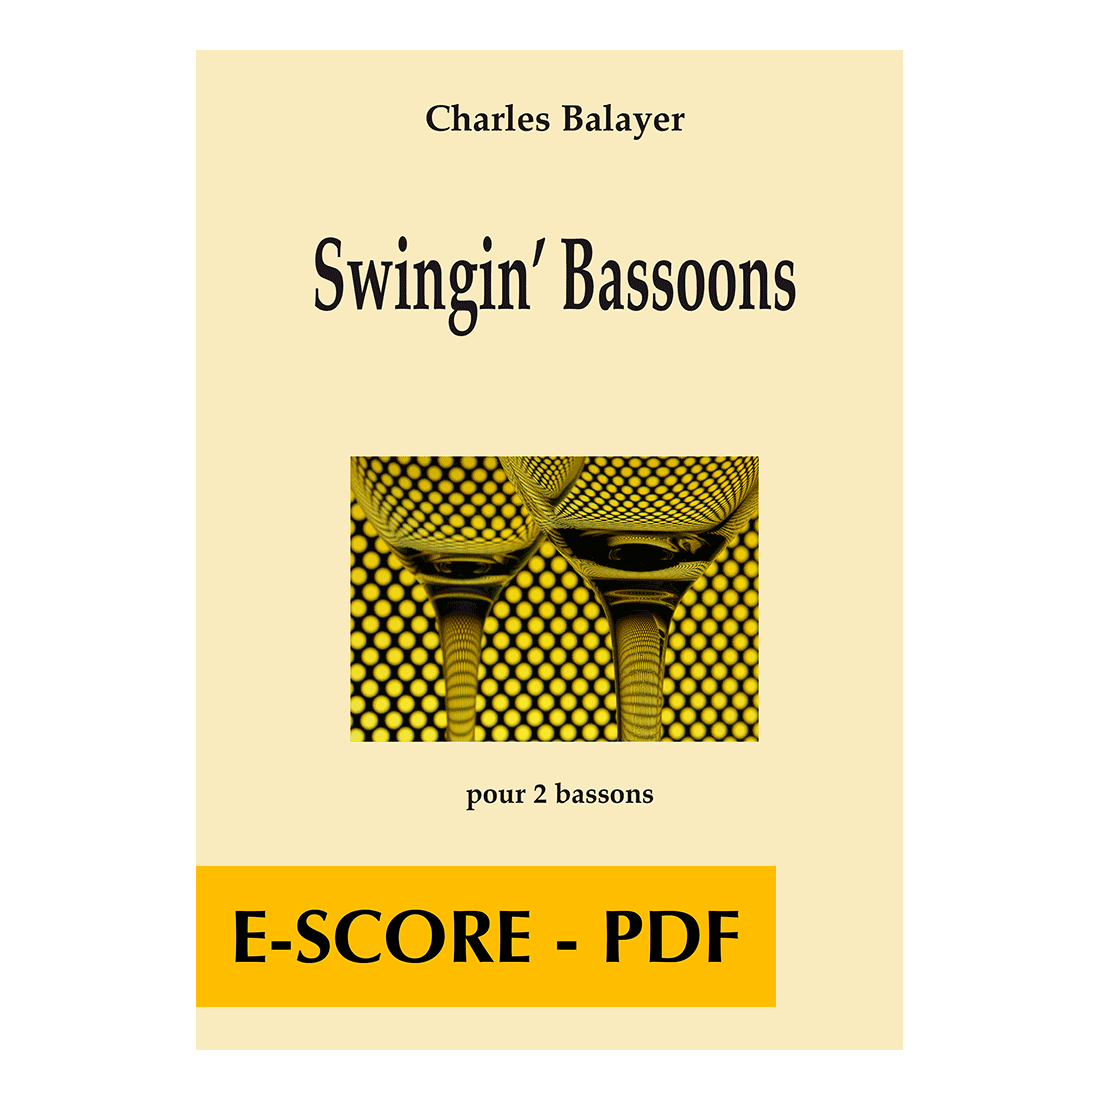 Swingin' Bassoons for 2 bassoons - E-score PDF